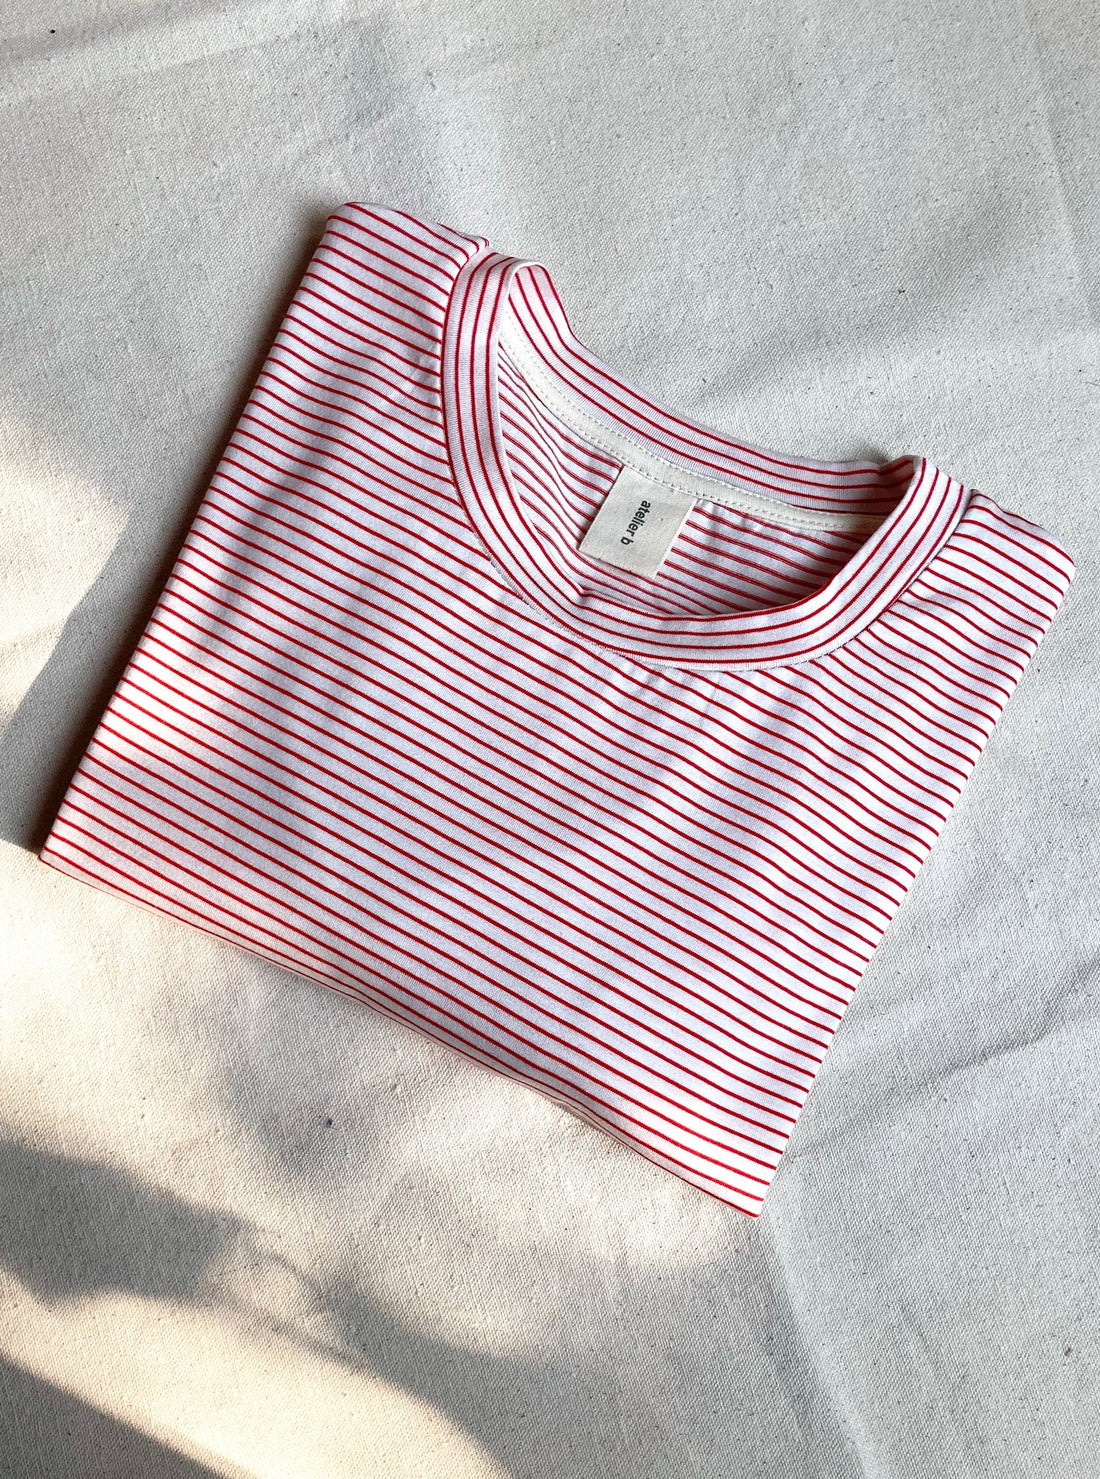 Unisex t-shirt No6076u, fine stripes